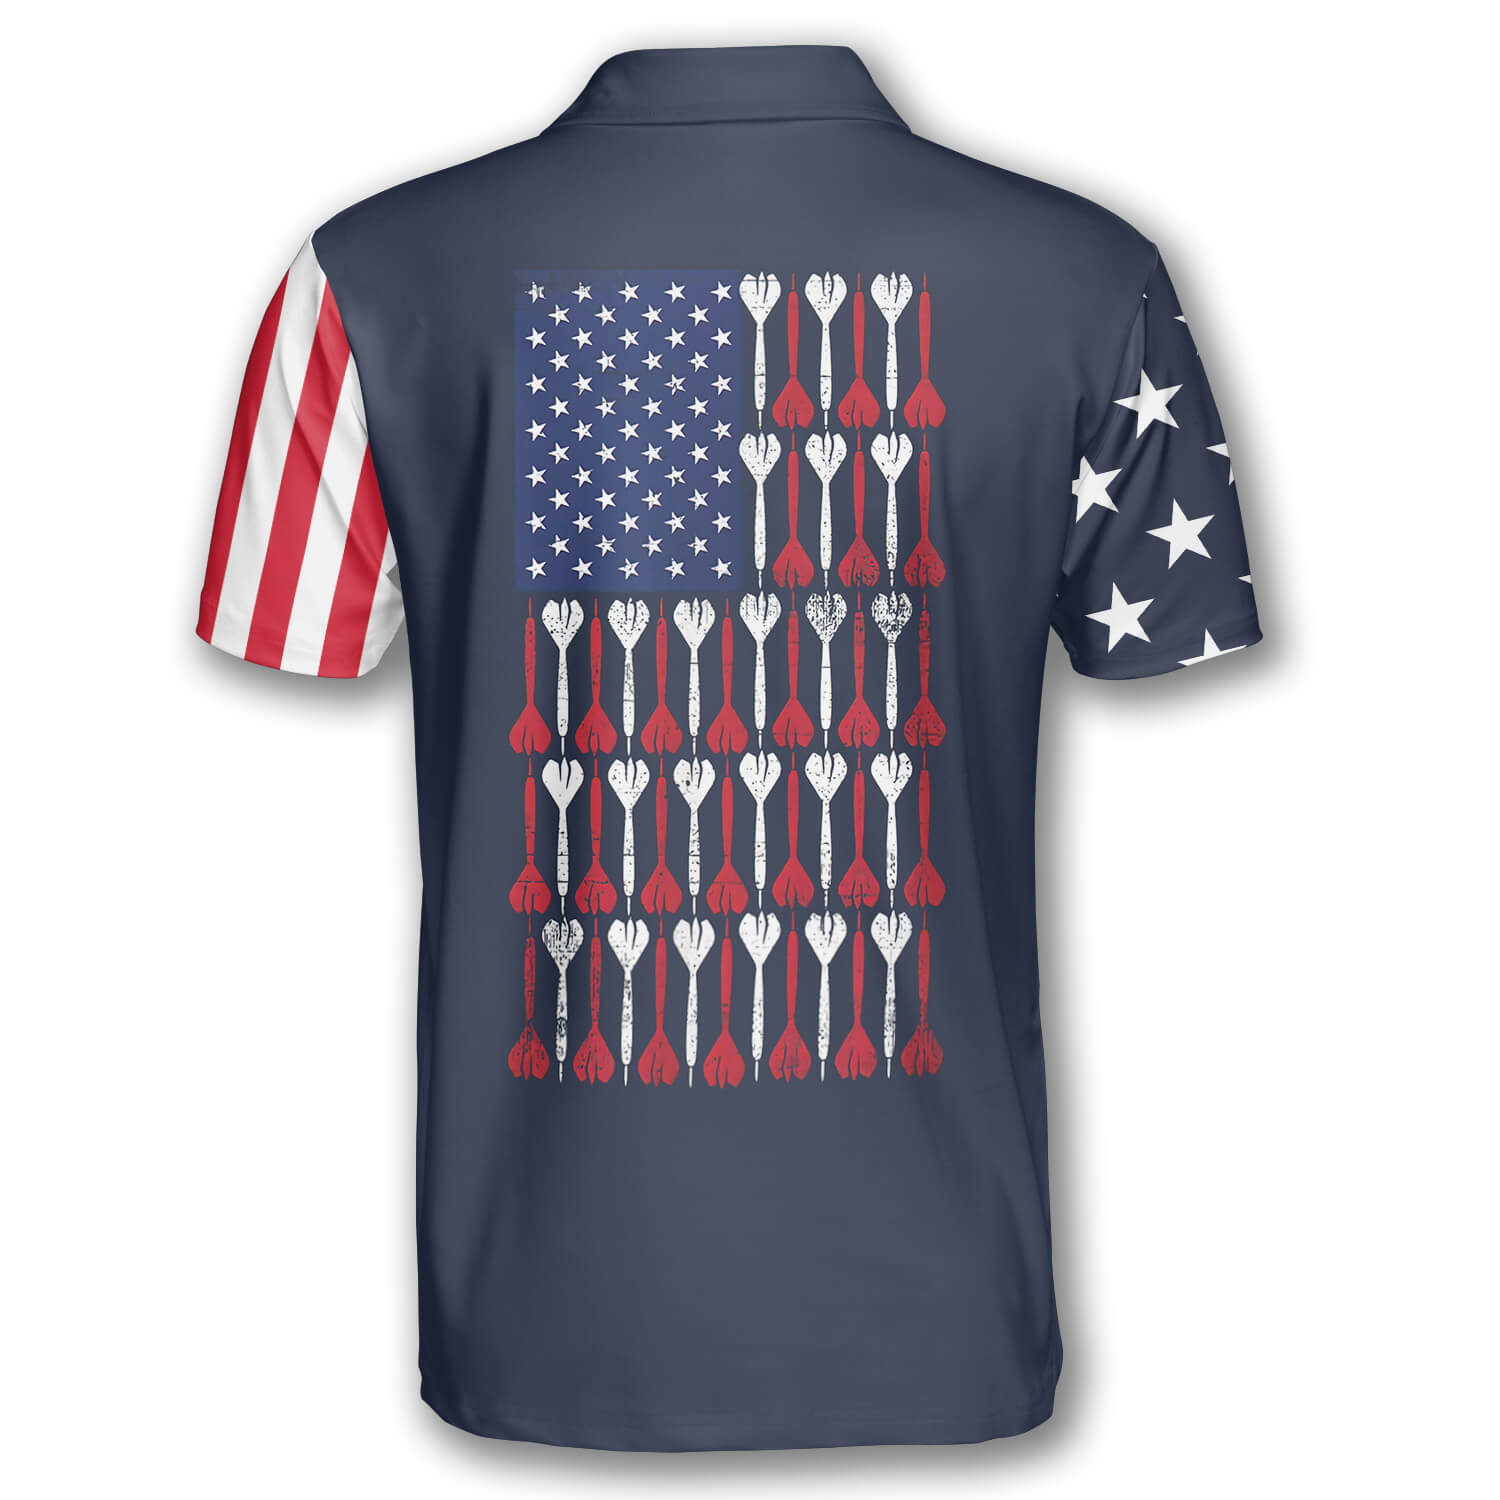 Personalized Name Dart Flag American Polo Unisex Shirt/ Dart Flag Shirt/ Gift For Him